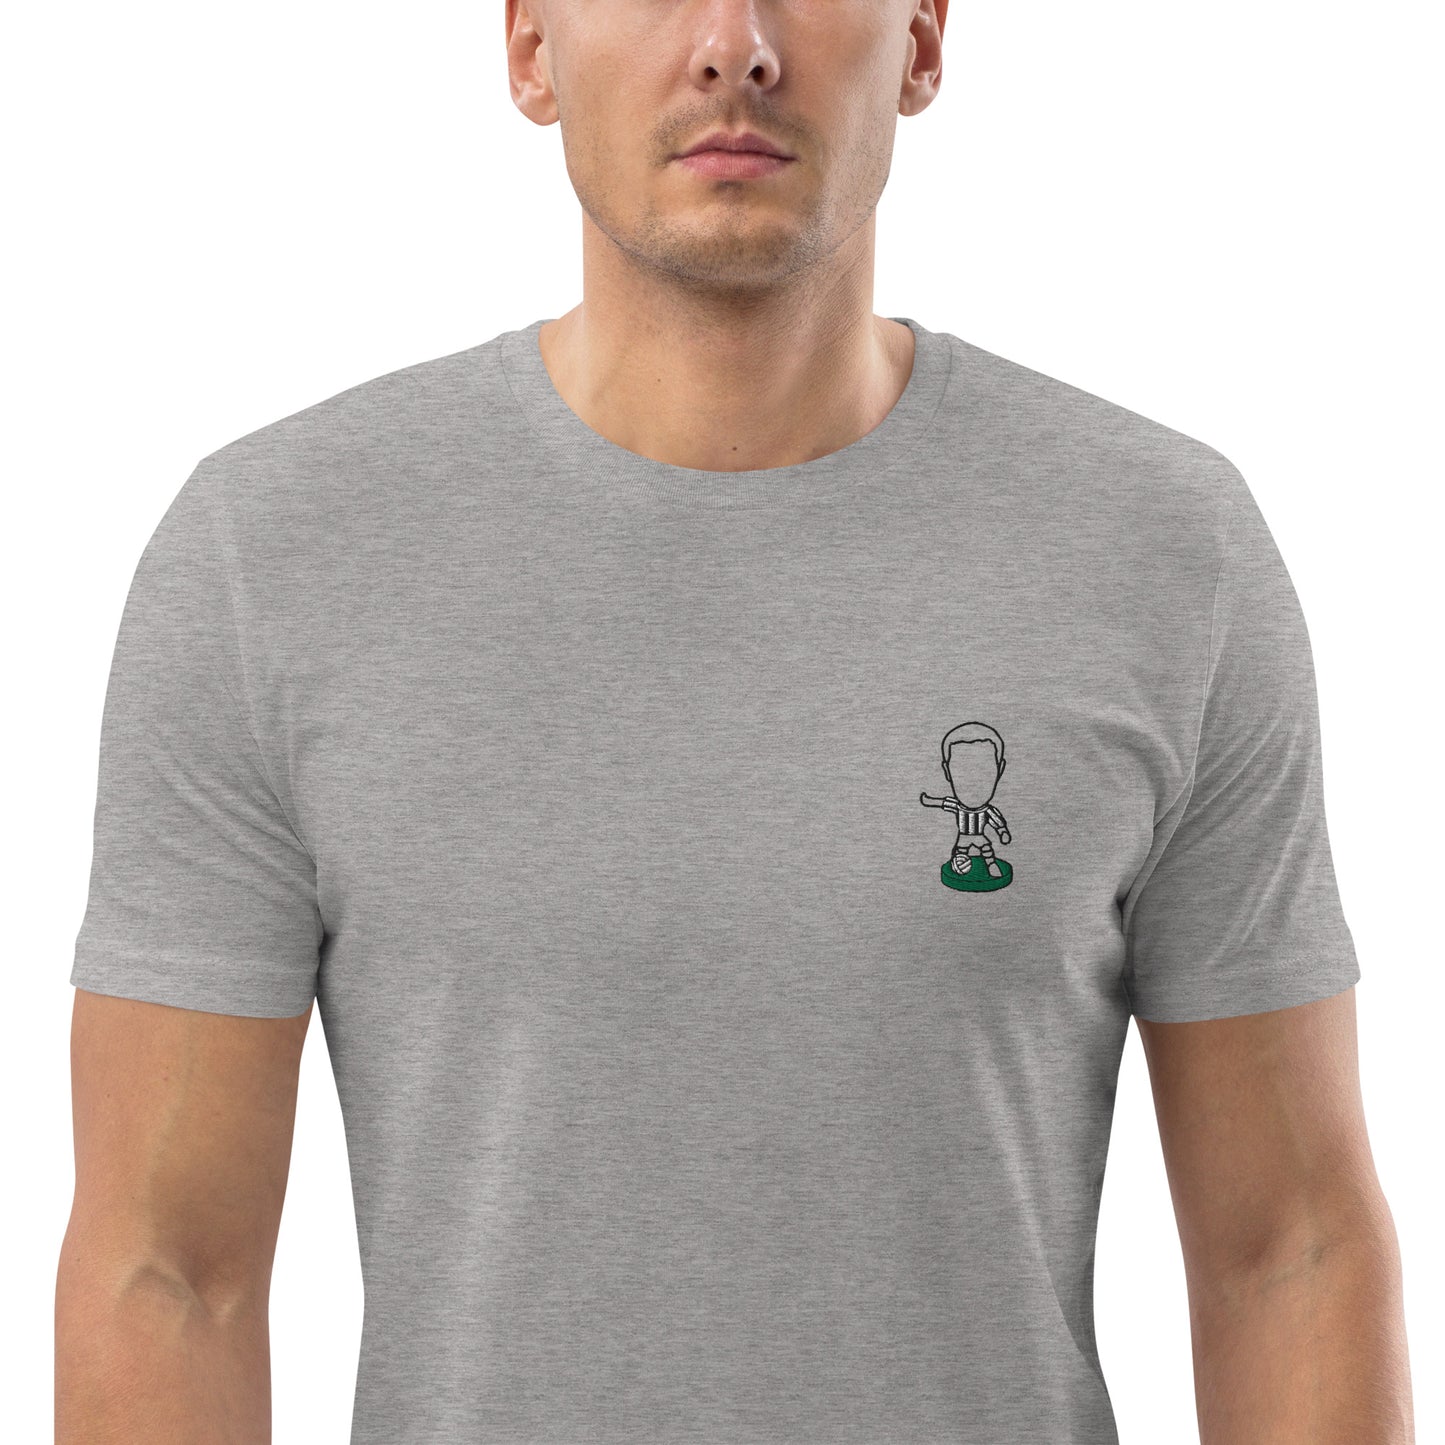 Tyneside Stripes (Black Outline) - Embroided - Unisex Organic Cotton Football T-Shirt - Newcastle United Inspired